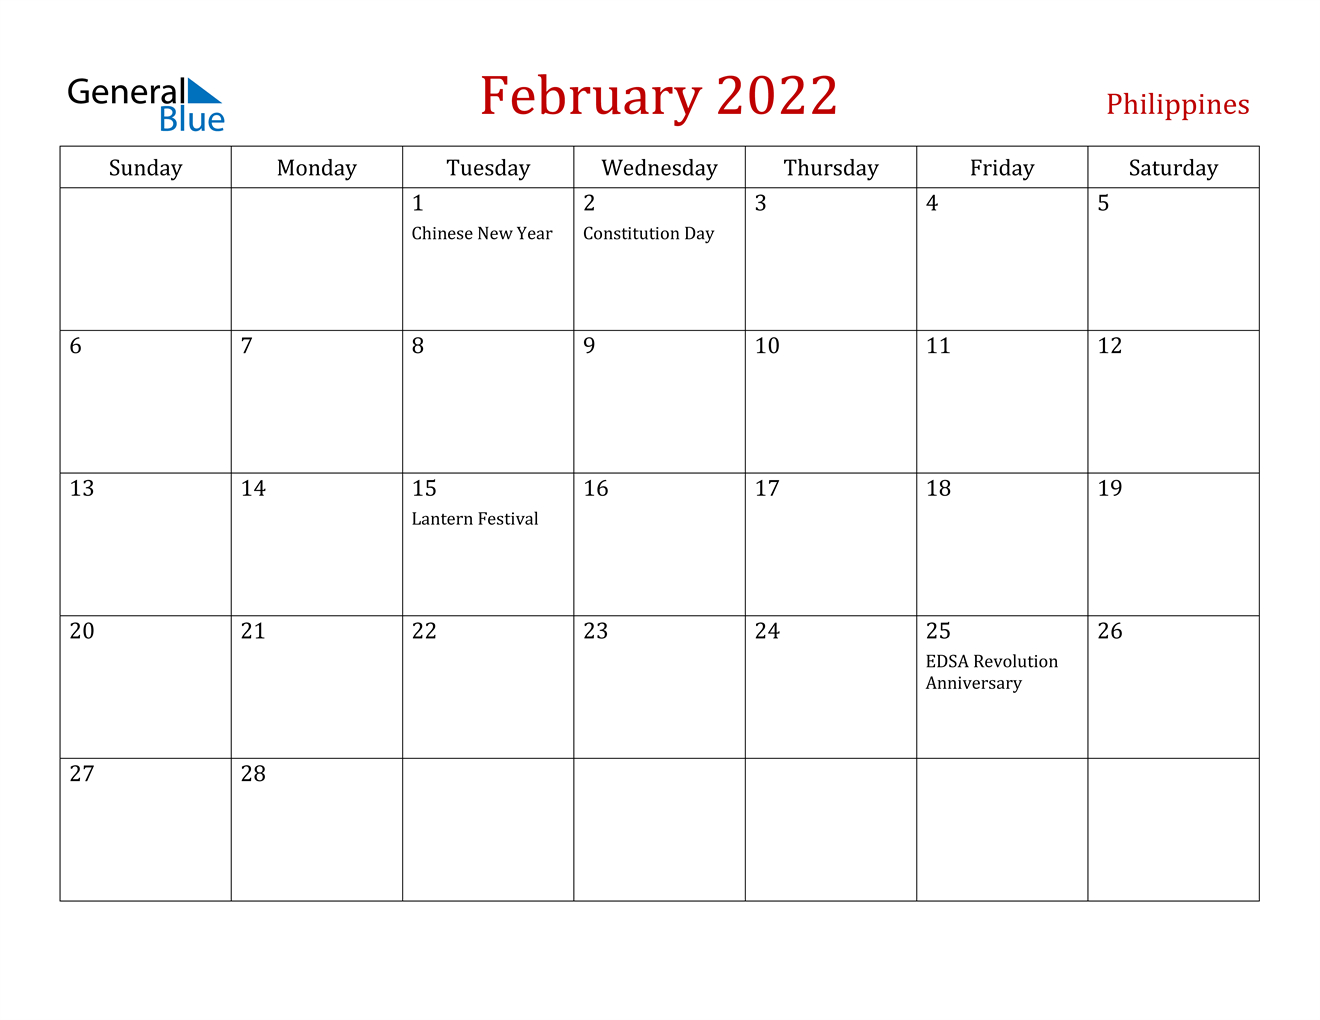 February 2022 Calendar Philippines